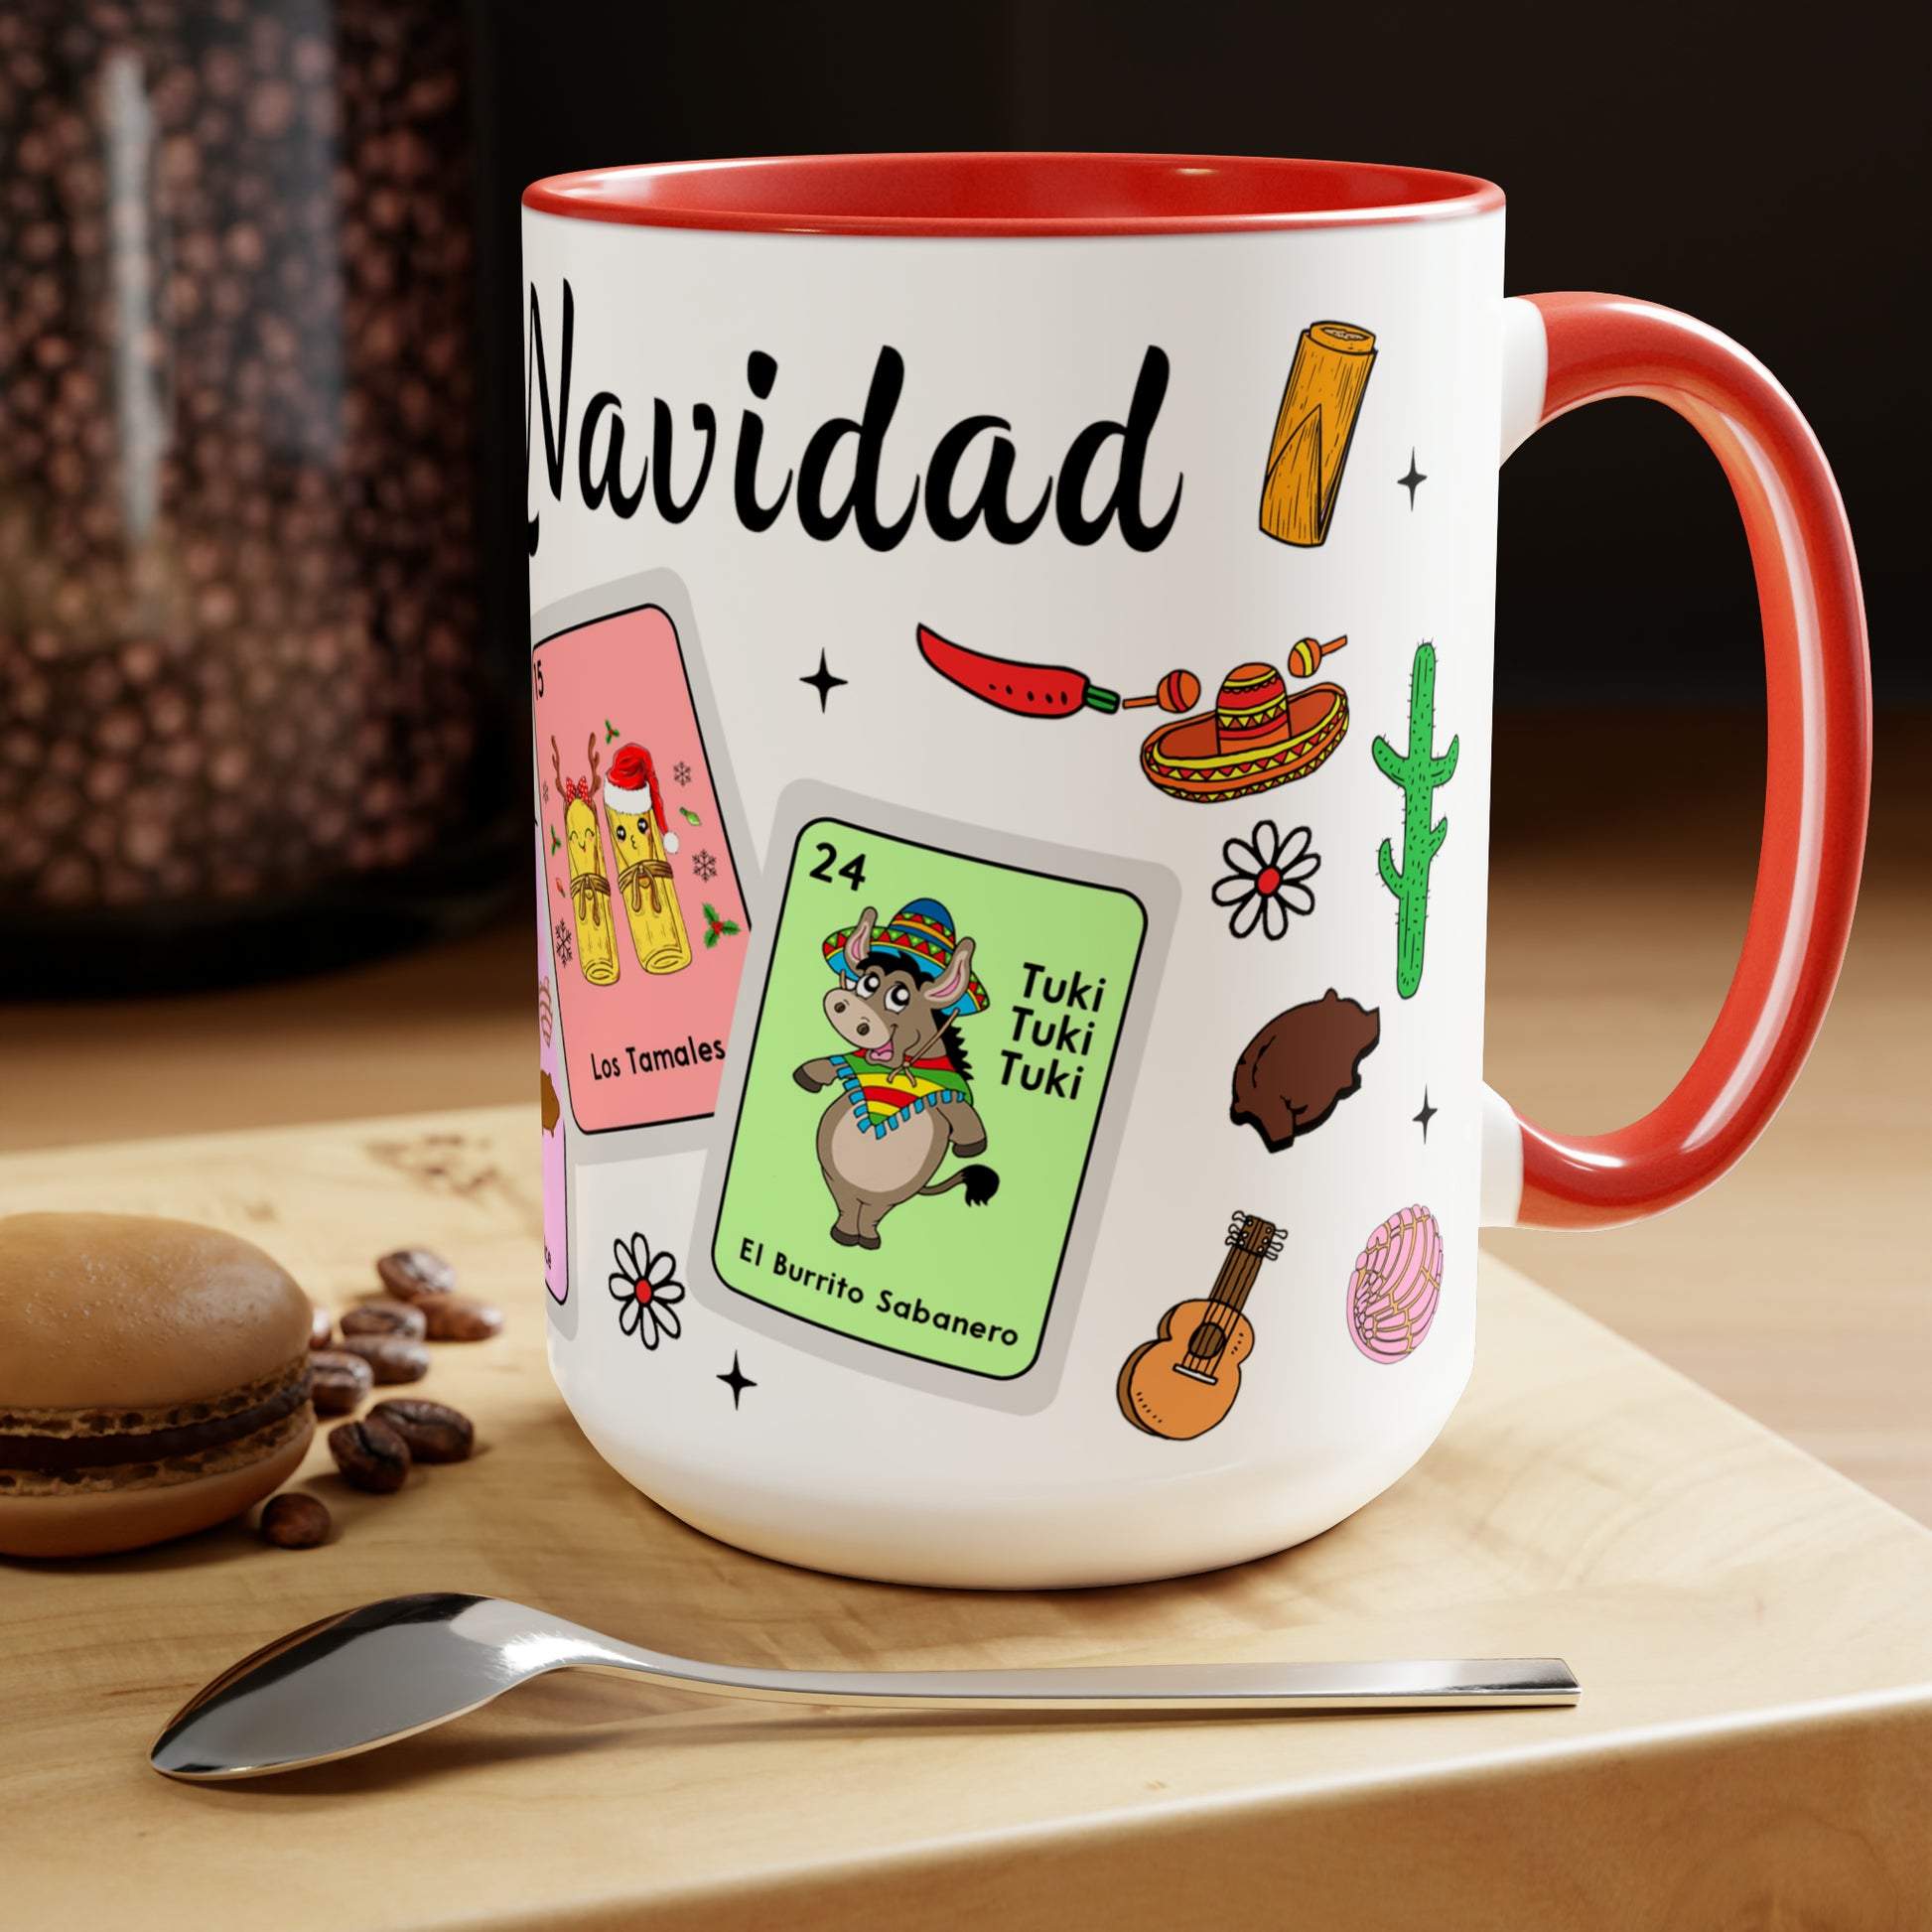 Feliz navidad Coffee Mugs, 15oz for Mexican family or Latin friend